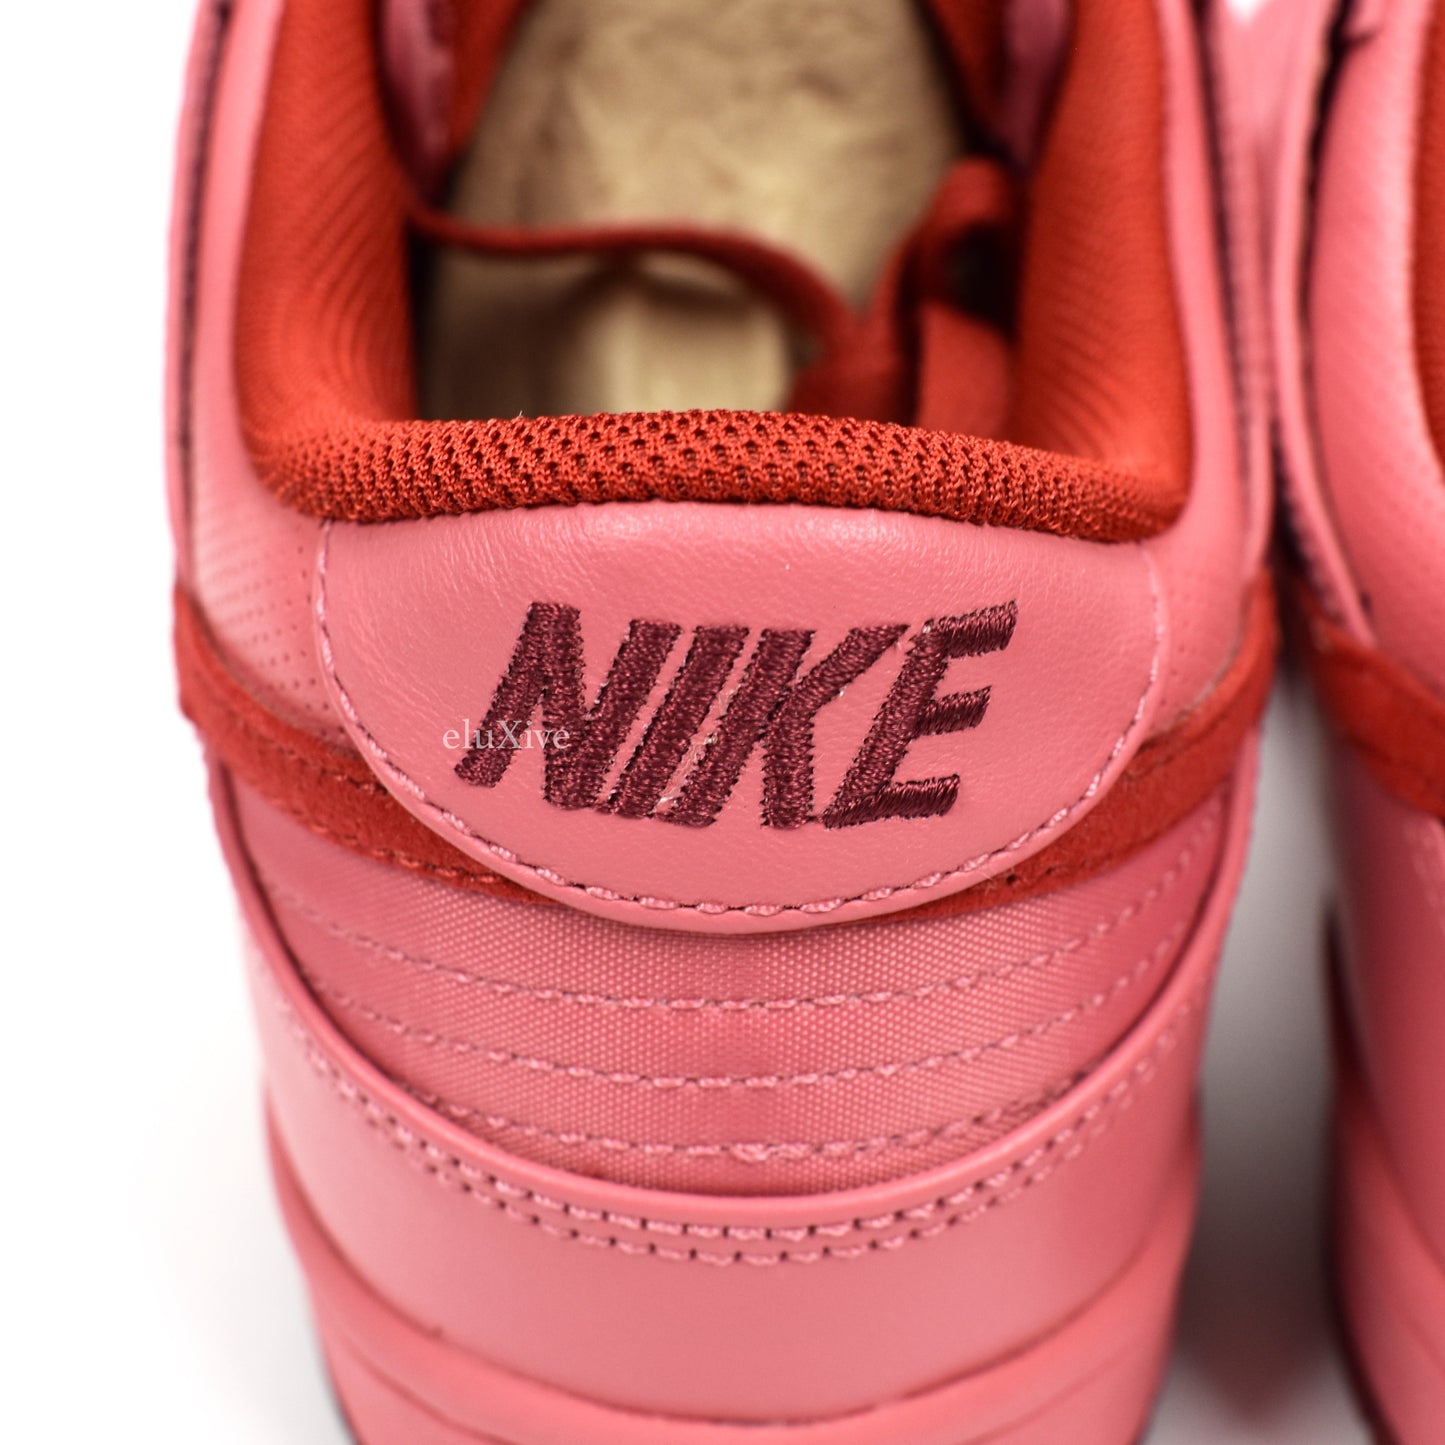 Nike - Dunk Low Premium Basic 'Desert Bloom'